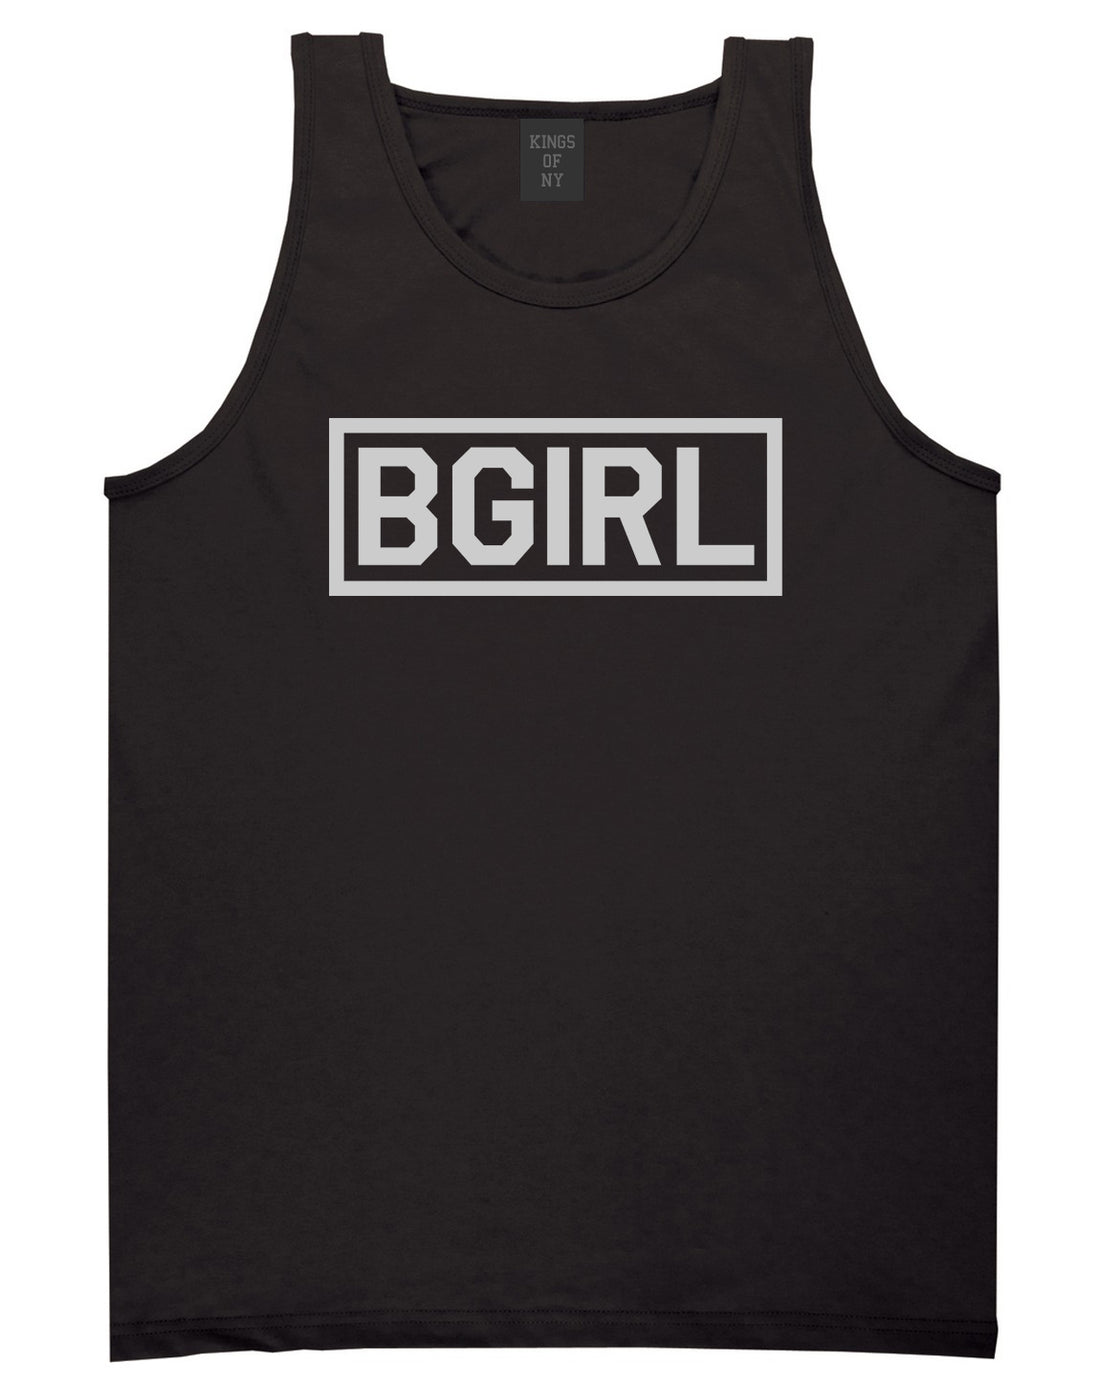 Bgirl Breakdancing Black Tank Top Shirt by Kings Of NY